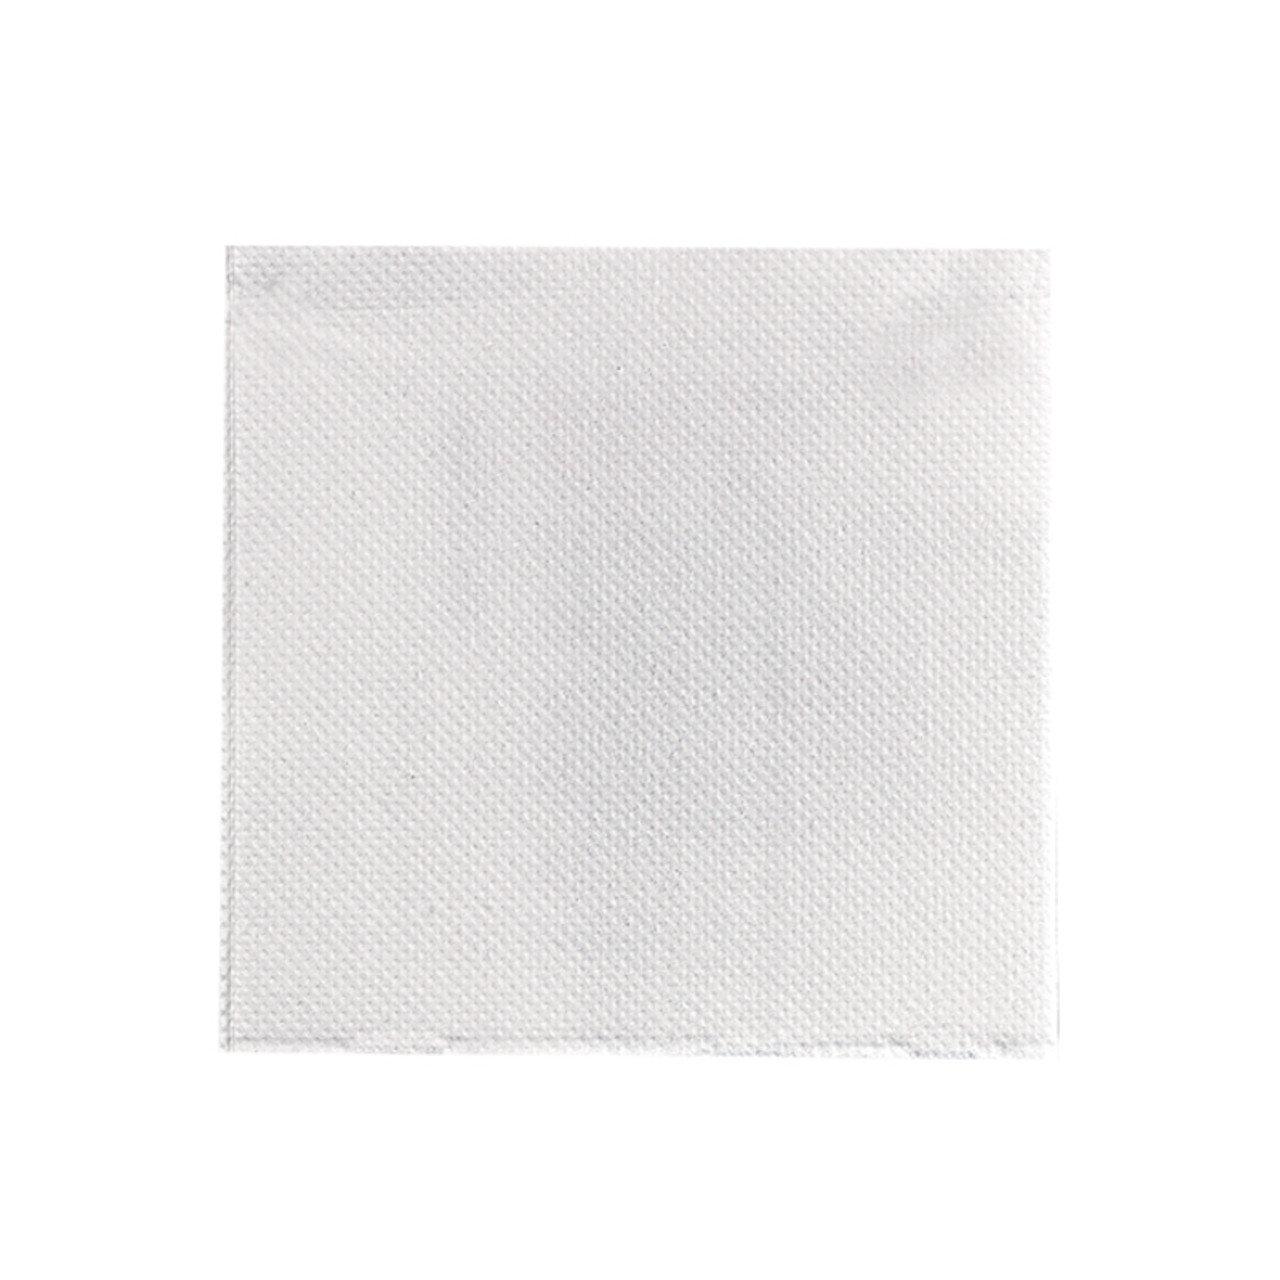 210SMP4040W Point to point White Tissue Napkin 15x15in 2 Ply, 14 Fold - 50 pcs